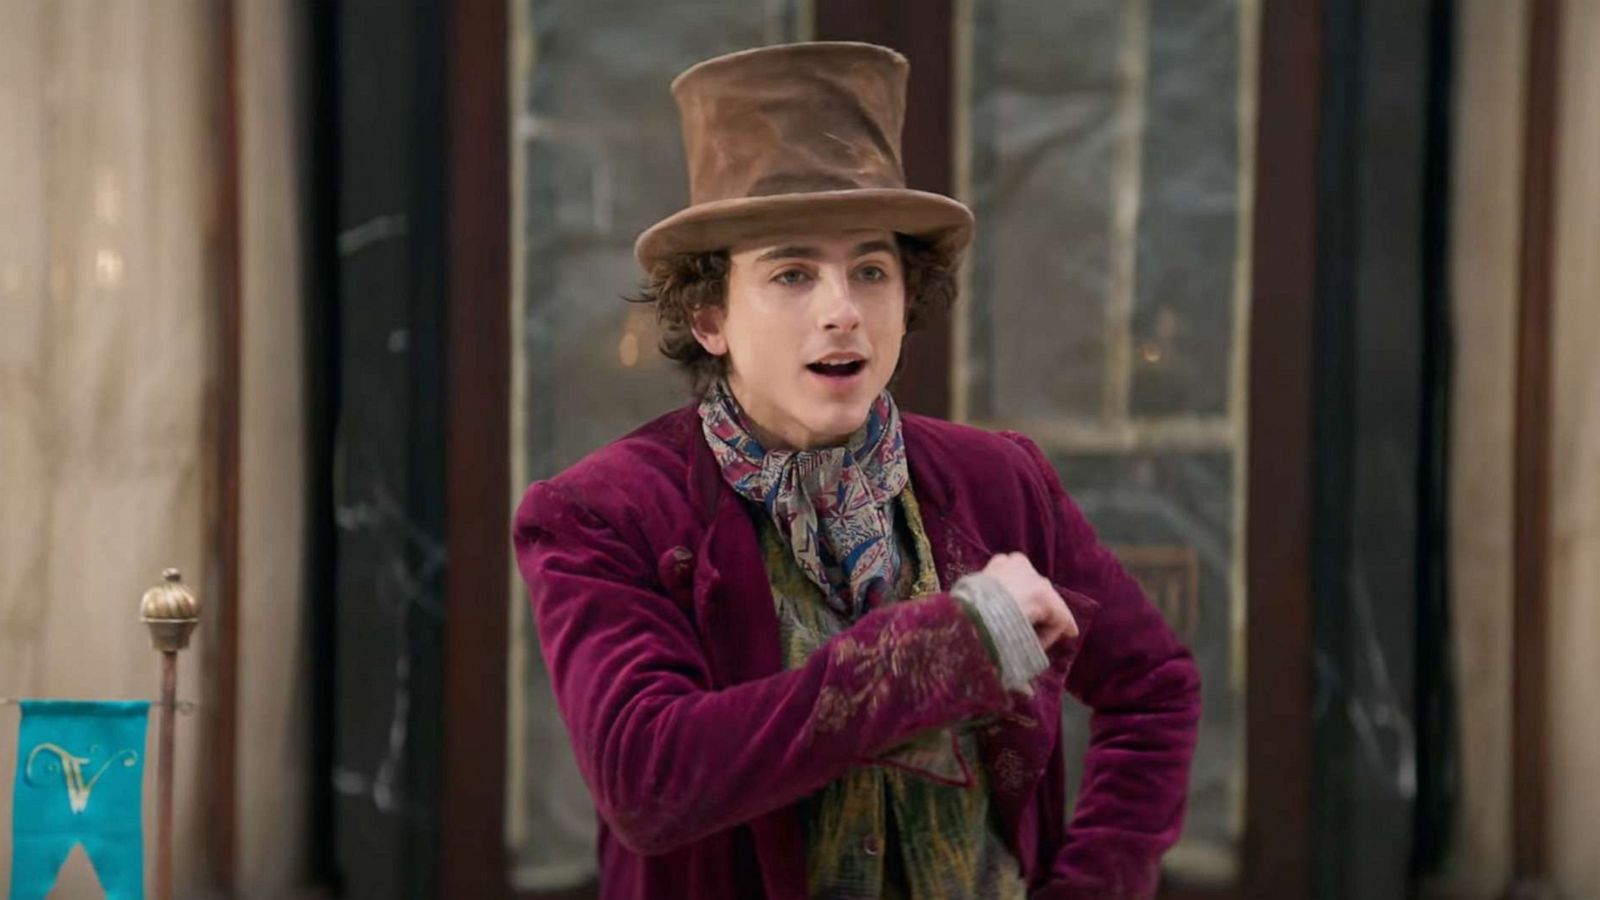 Willy 'Wonka' Prequel Movie: News, Cast, and Updates